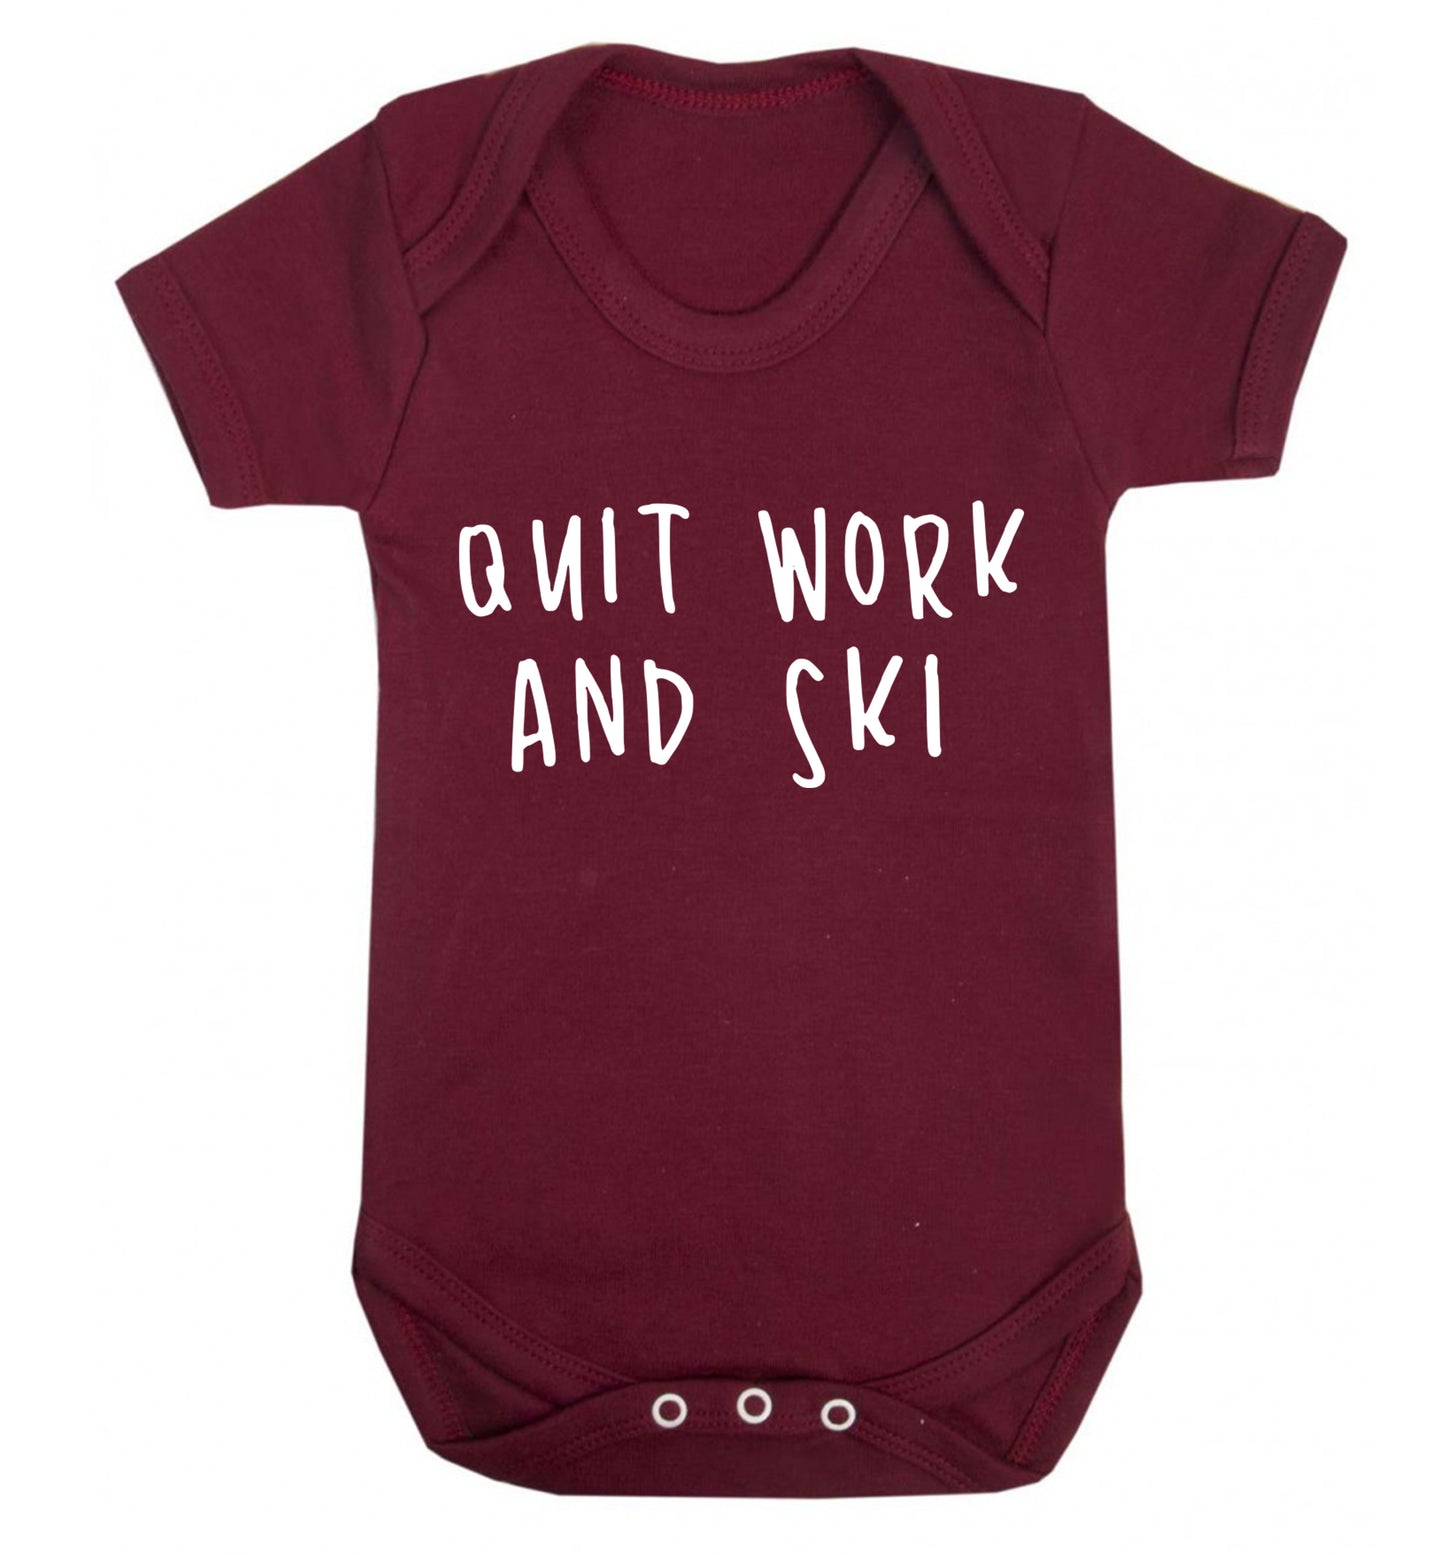 Quit work and ski Baby Vest maroon 18-24 months